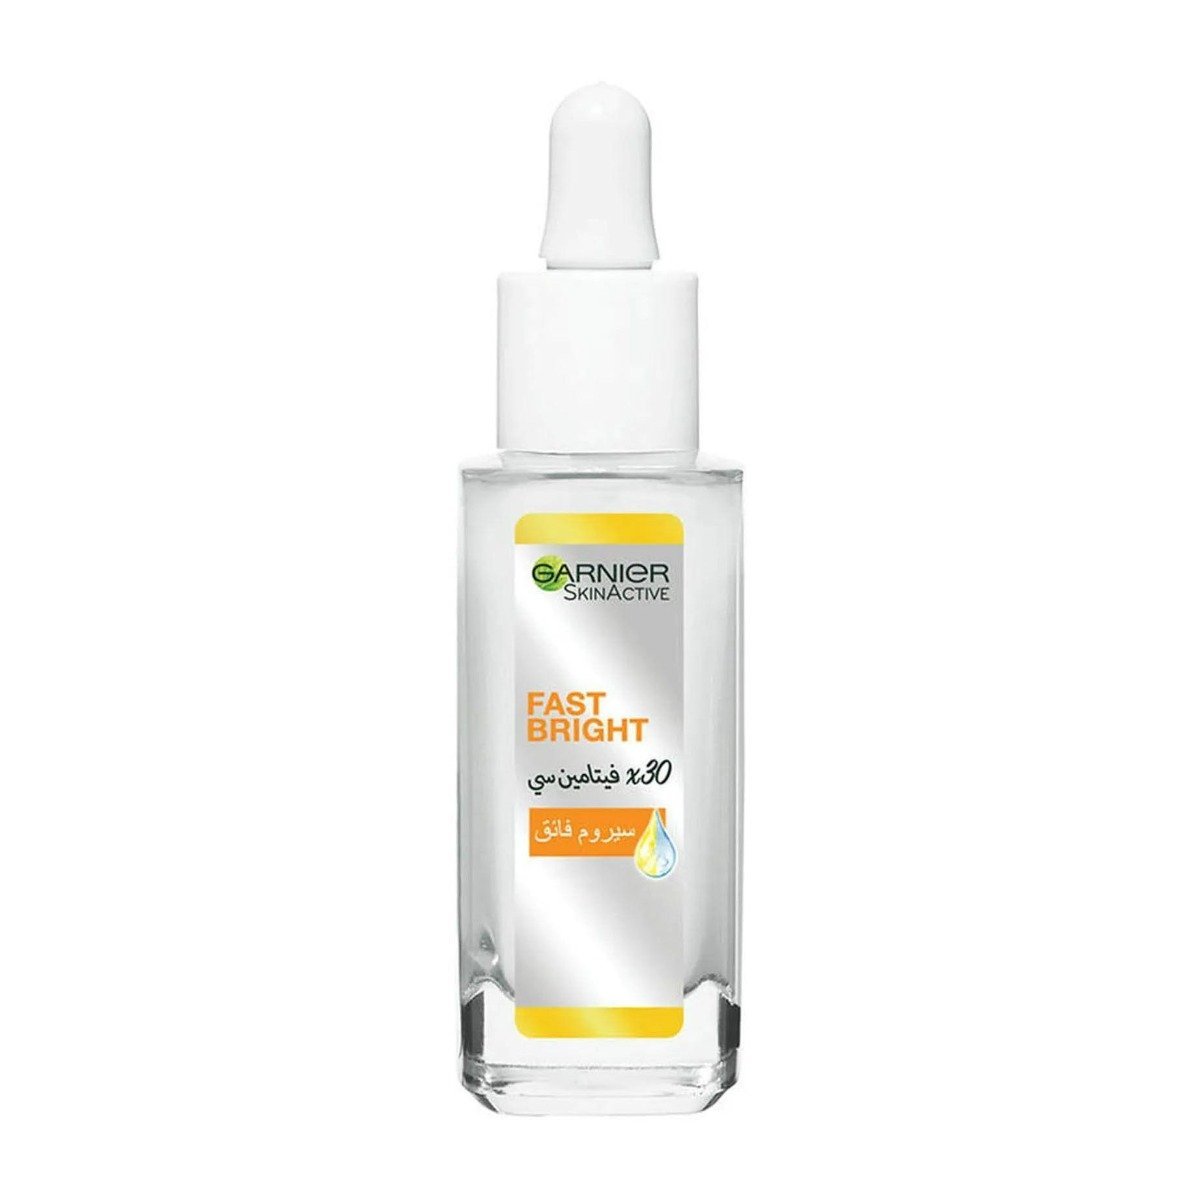 Garnier Fast Bright Vitamin C Serum - 30ml - Bloom Pharmacy